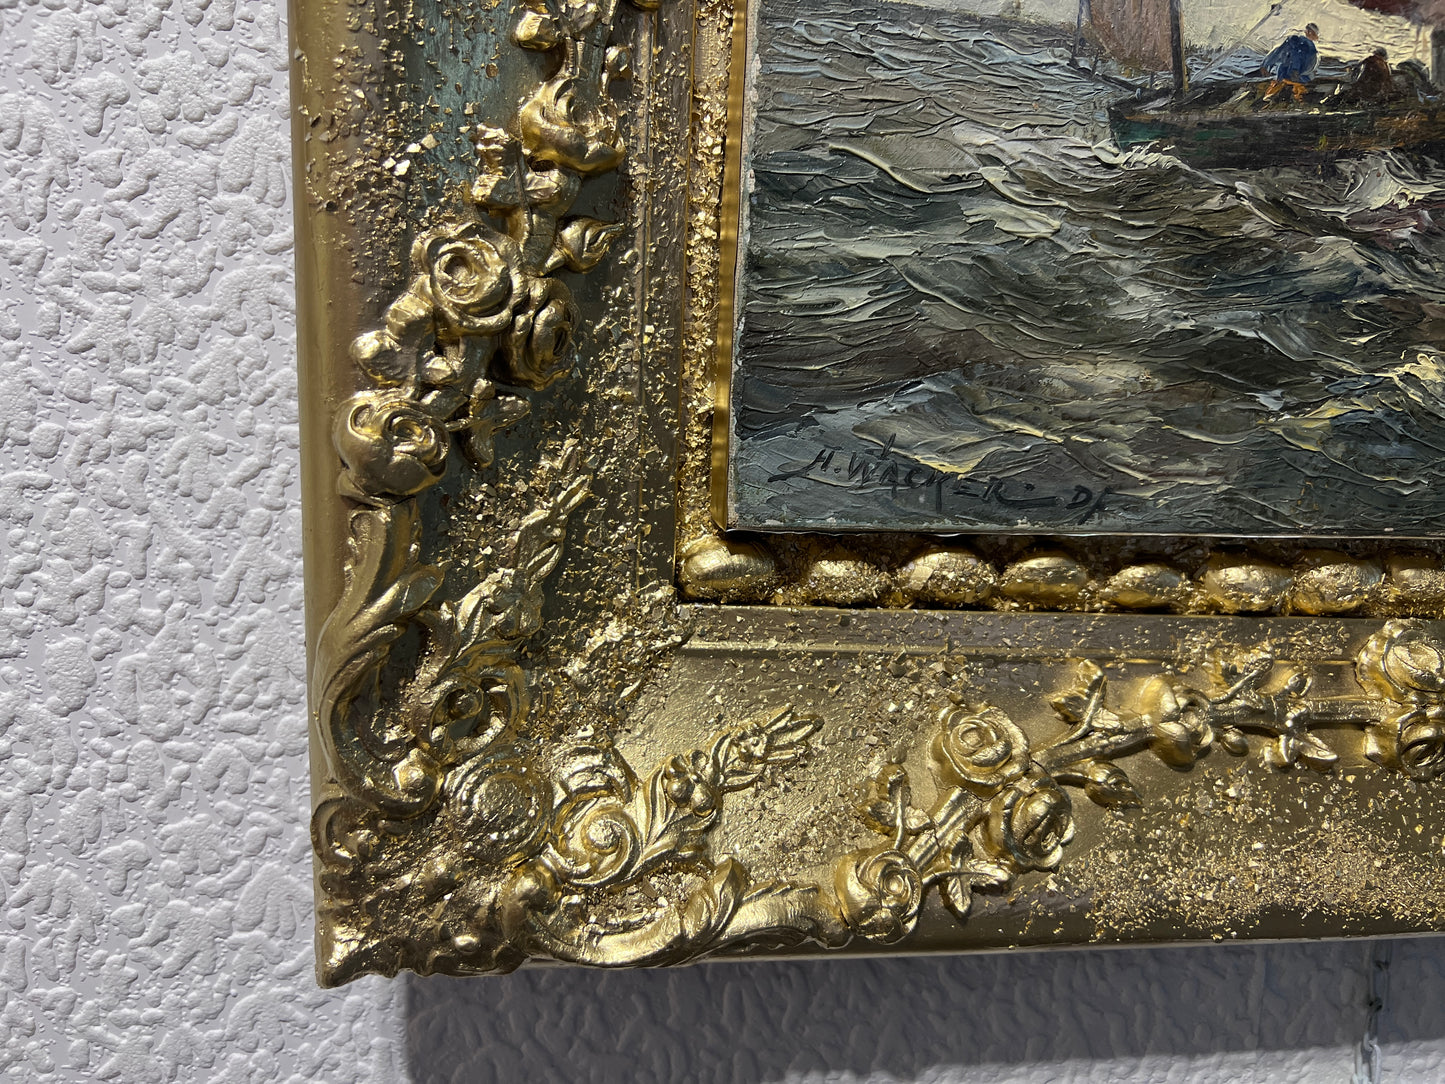 HANS WACKER-ELSEN Germany (1868-1958) Antique oil on canvas Seascape, Gold Frame